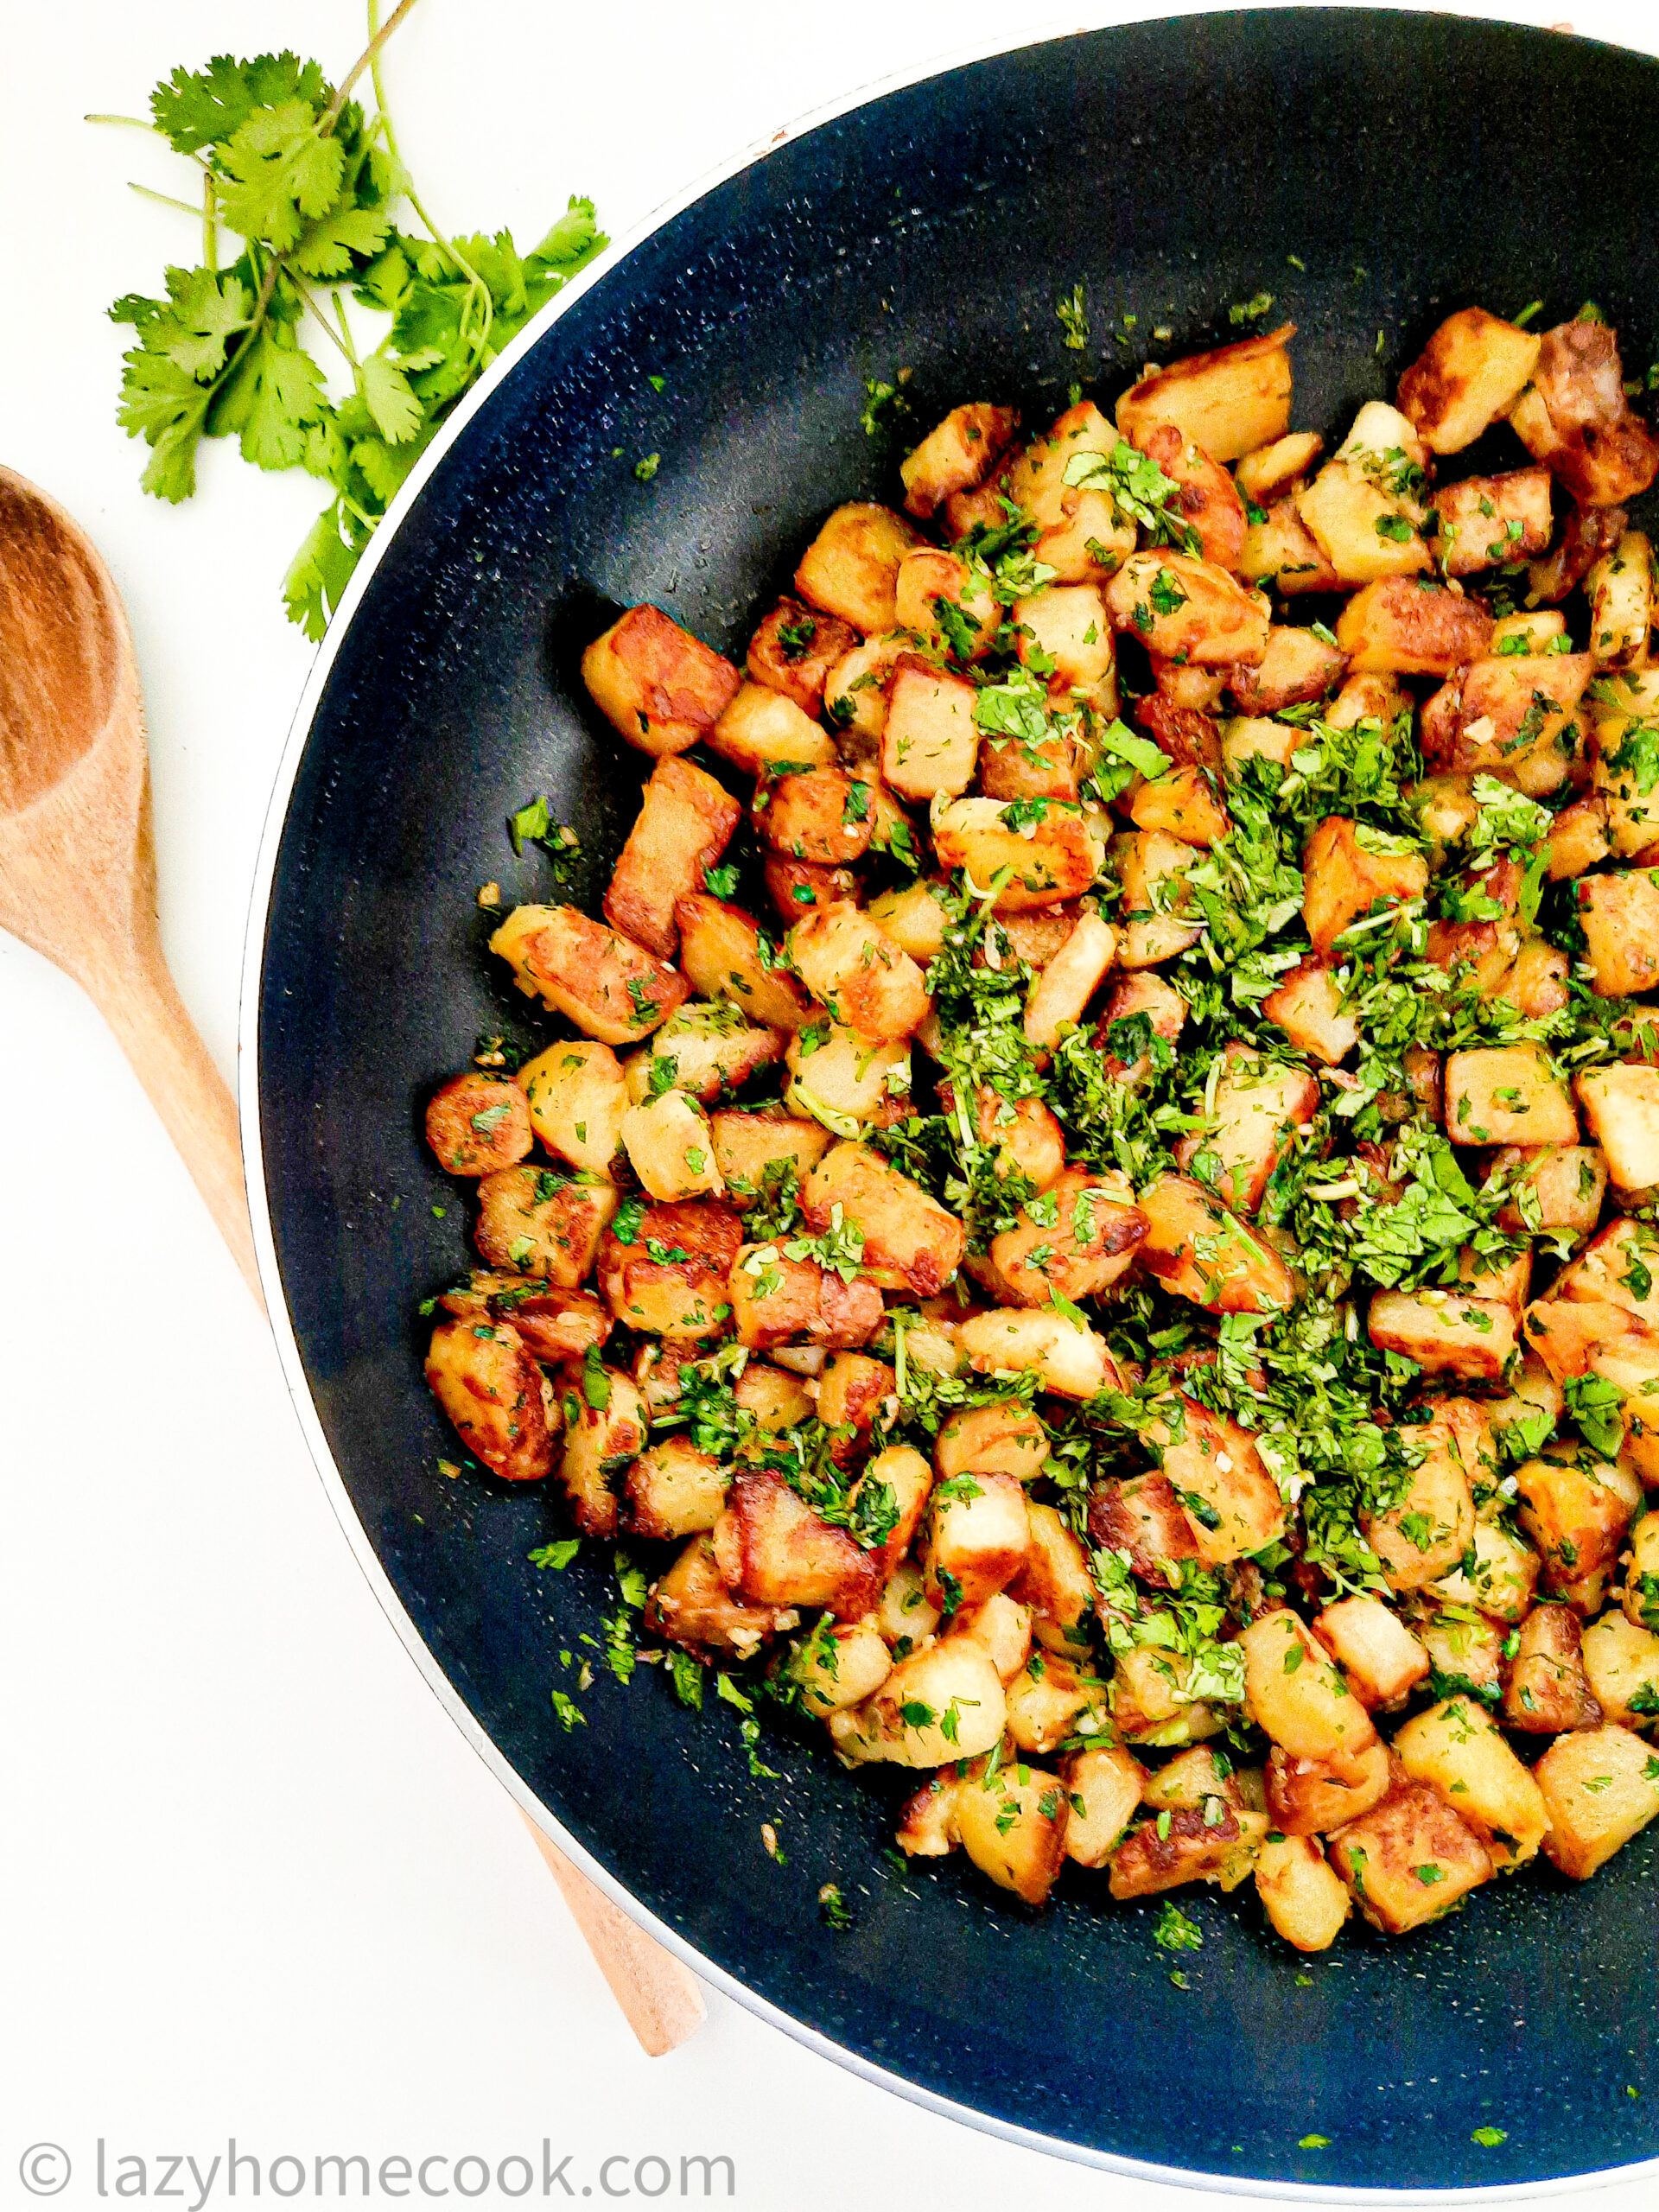 Lebanese fried potatoes with cilantro and garlic – Batata Harra